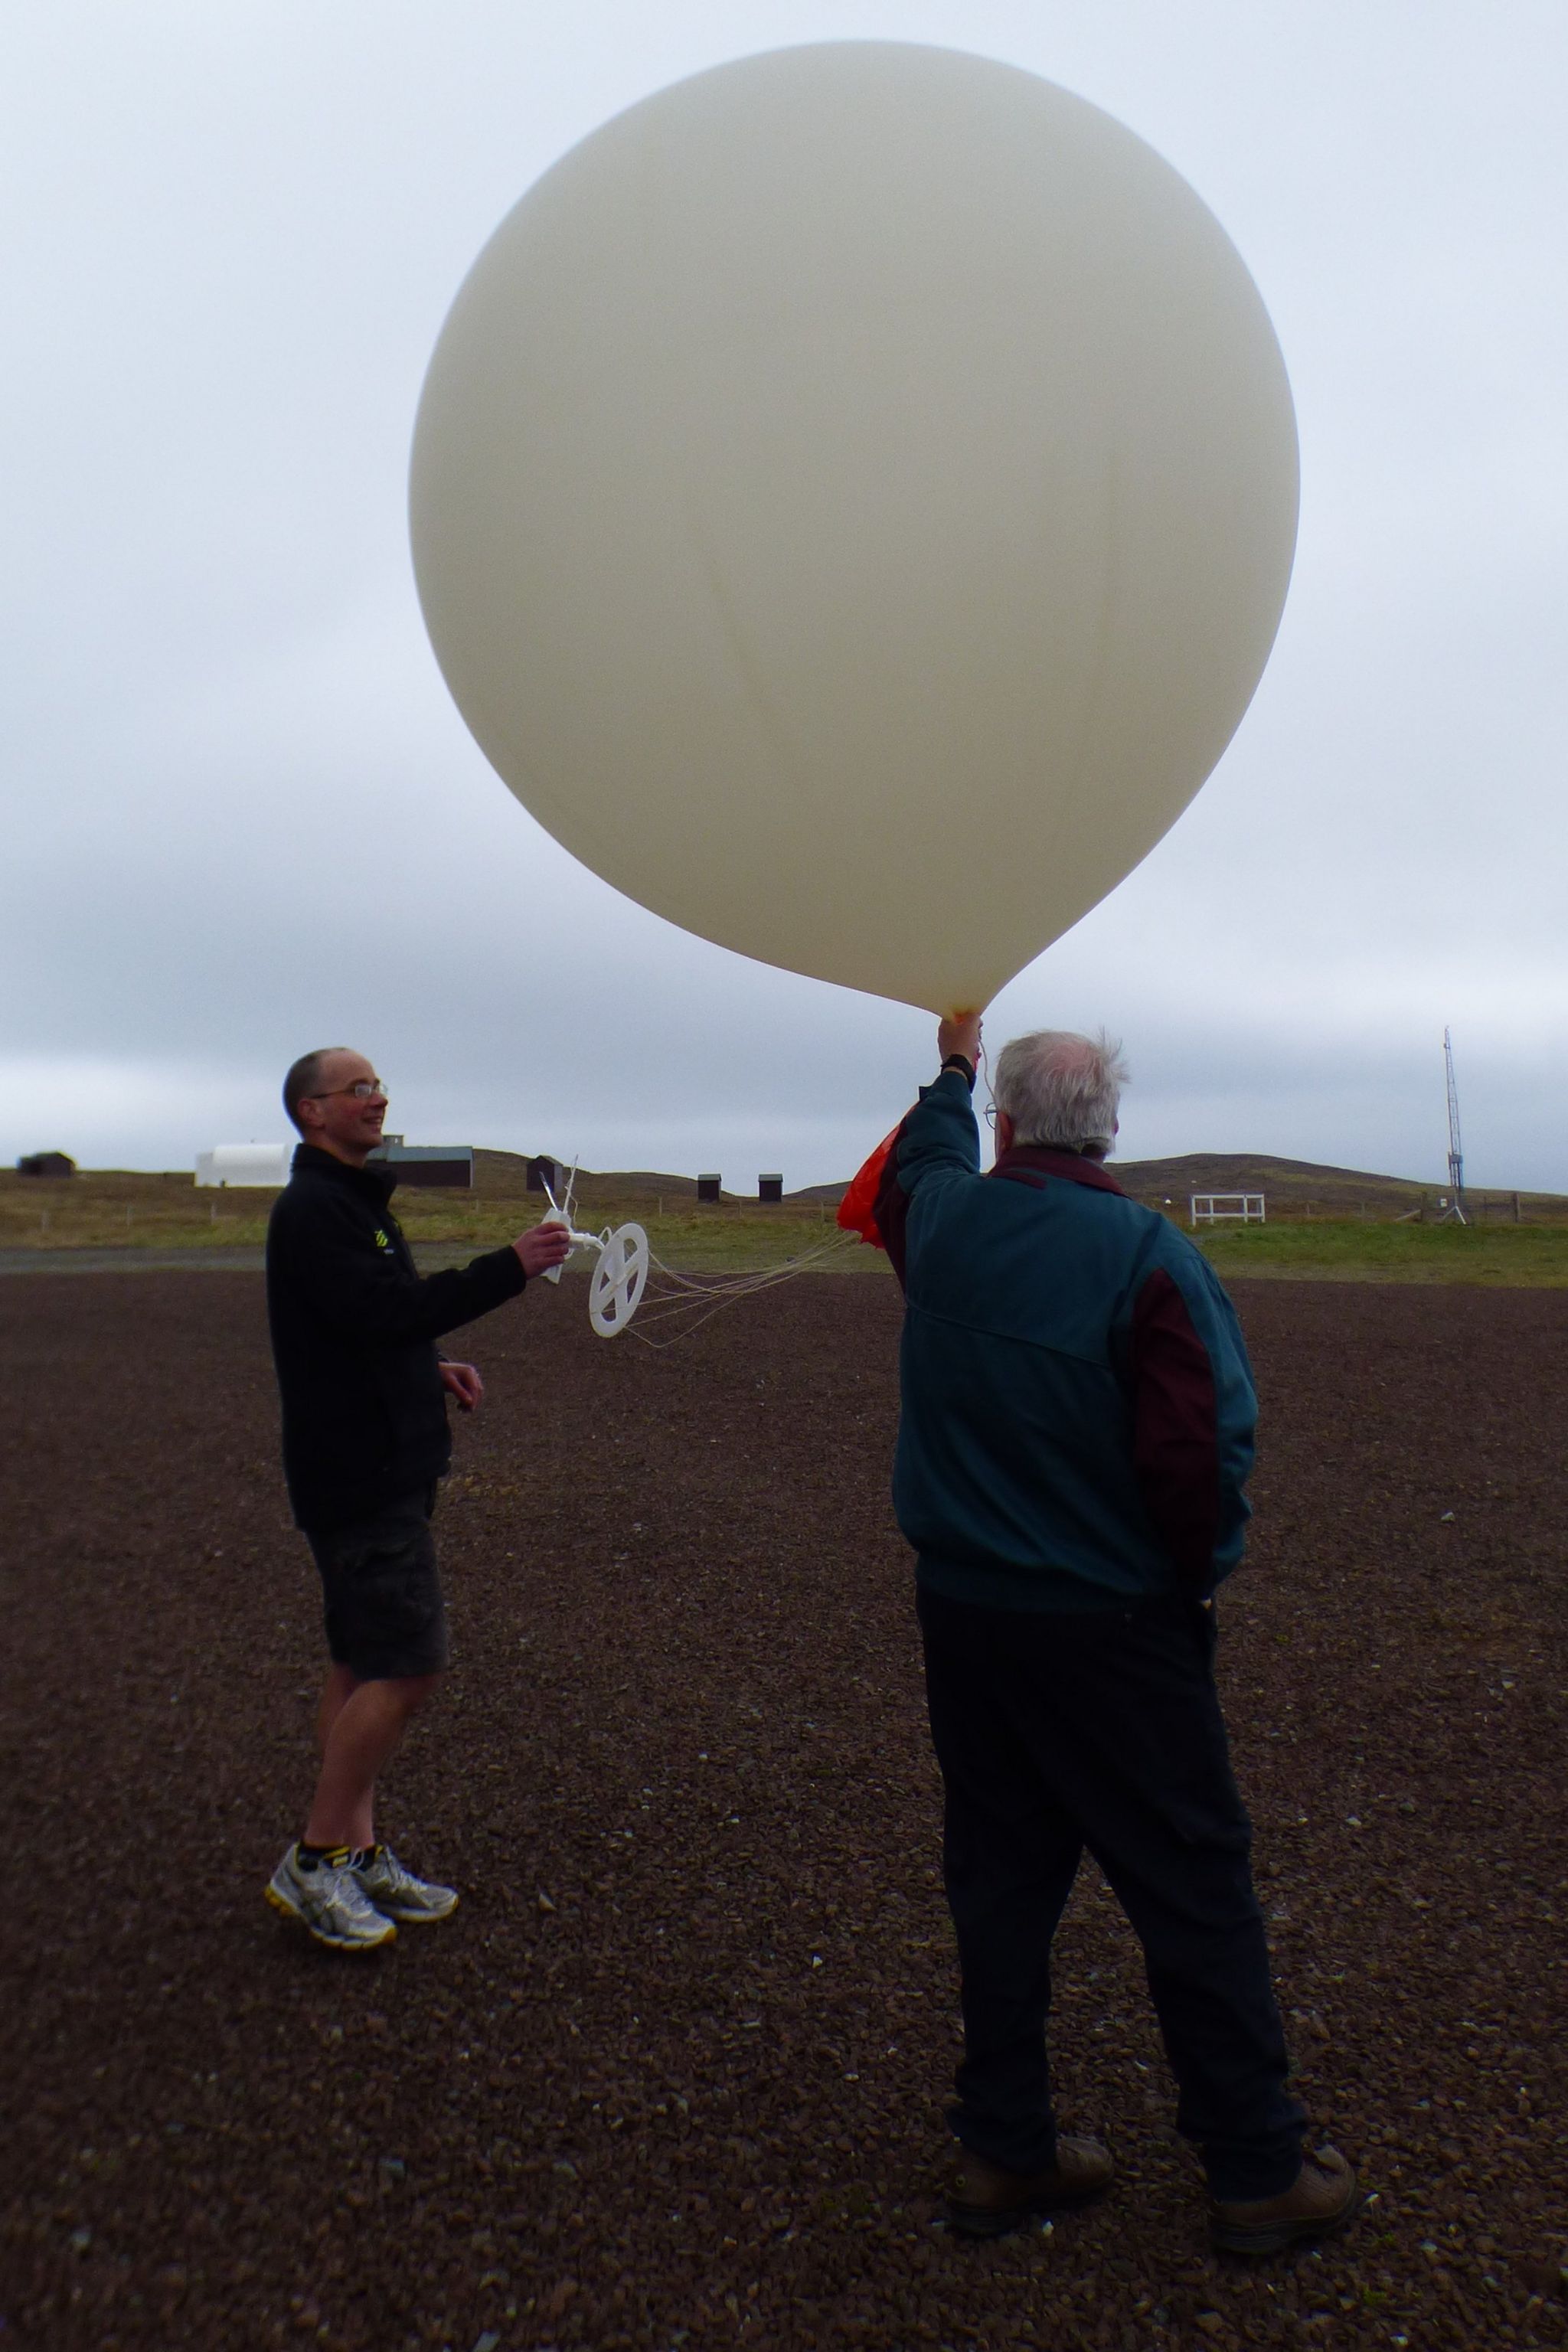 Allen launching one last weather balloon